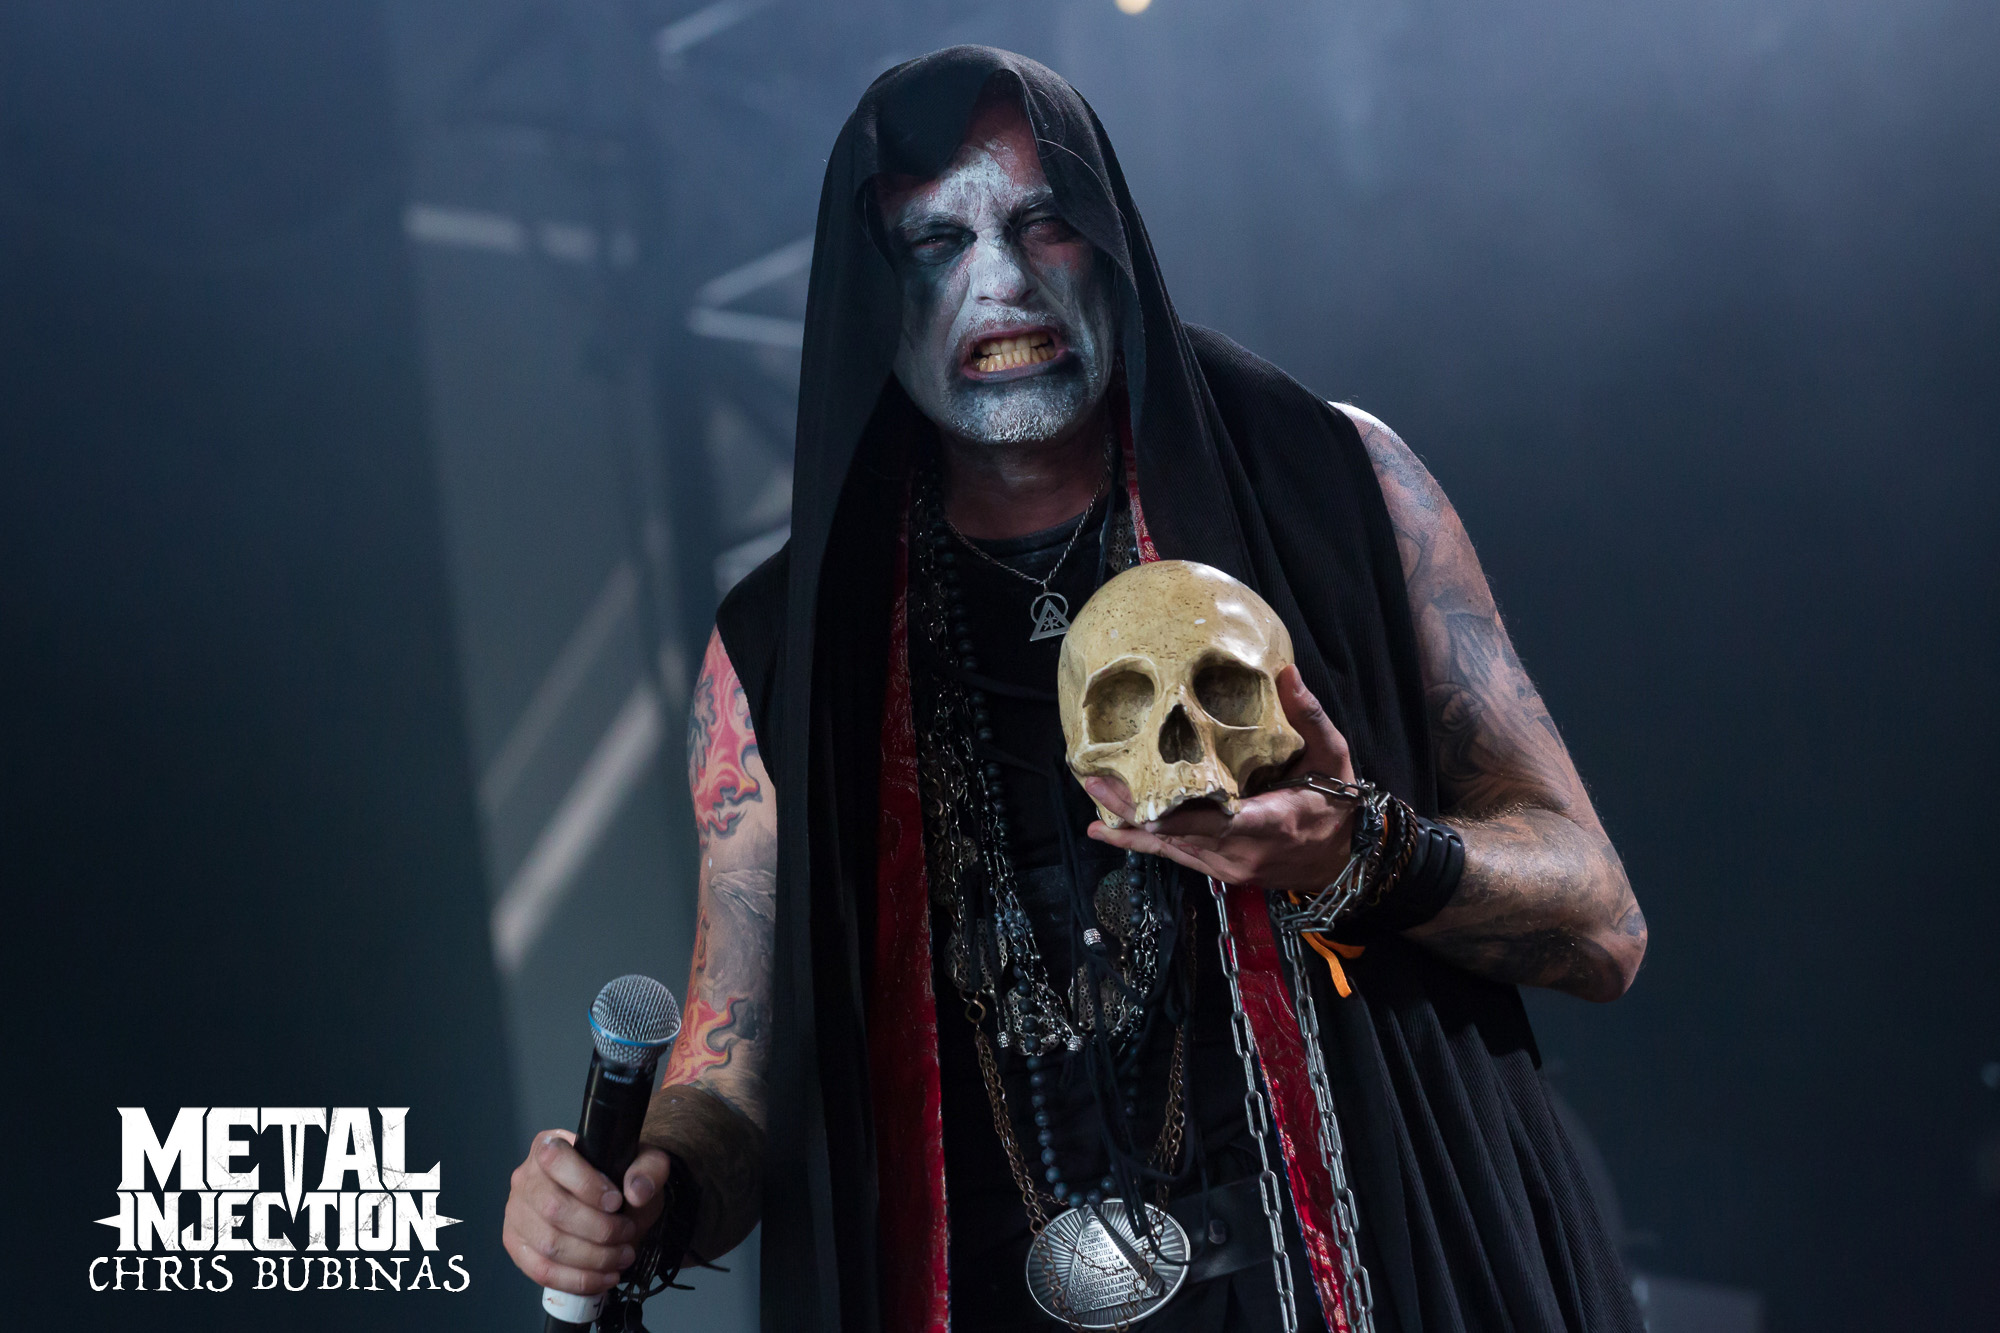 Hellfest 2022: A Gargantuan, Searing Celebration Of The Return Of Live Heavy Music